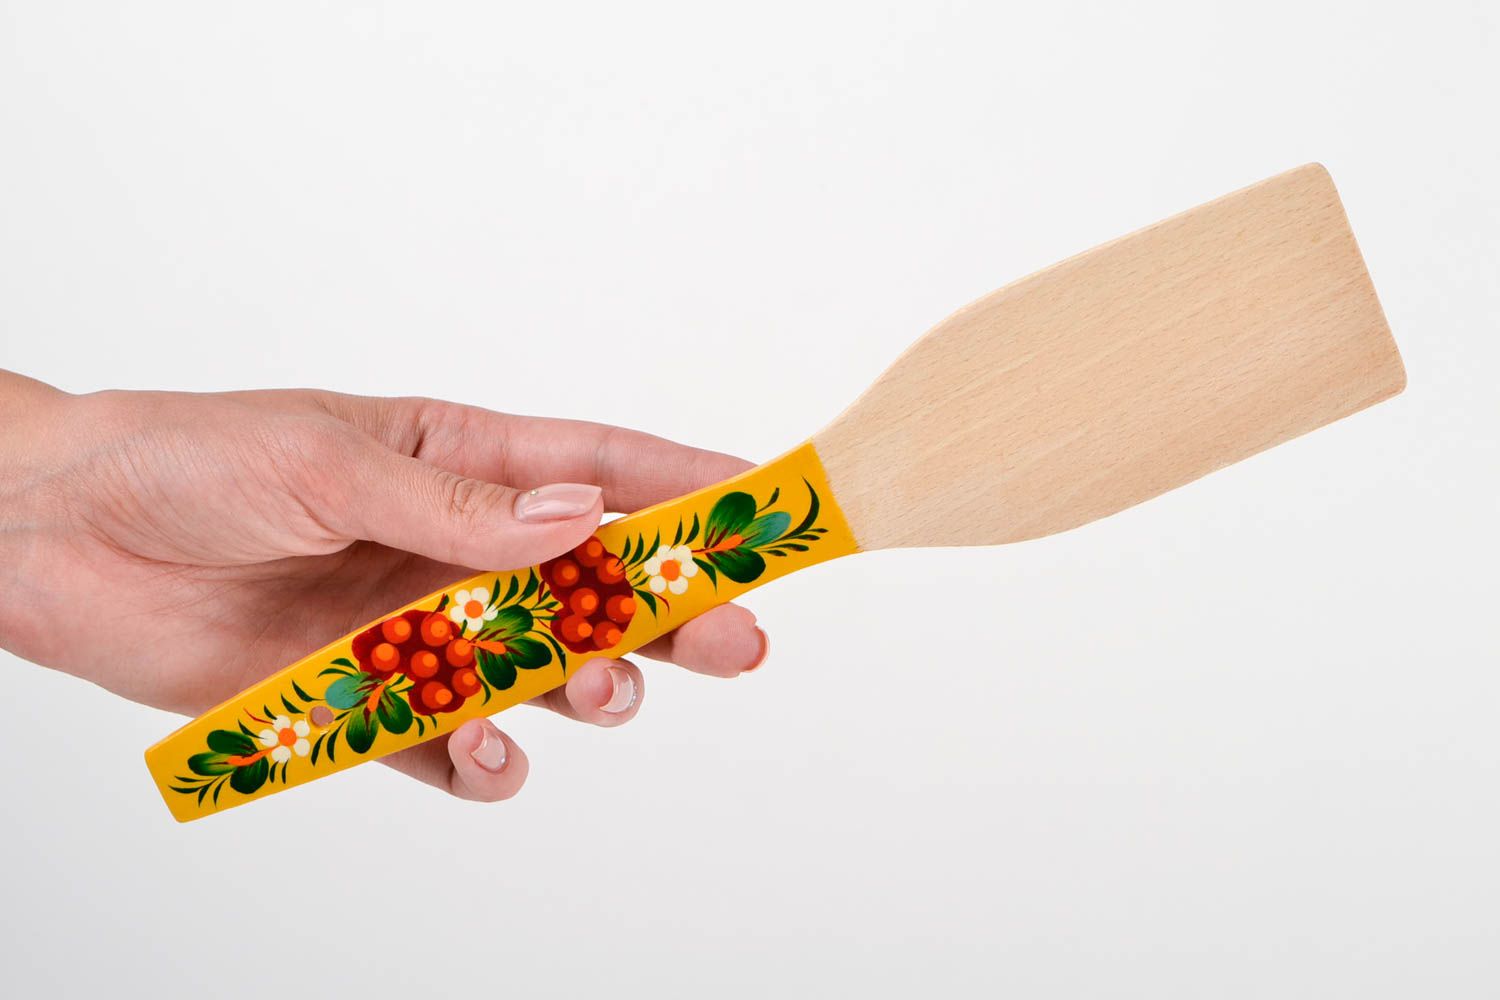 Handmade spatula wooden spatula for kitchen decor ideas unusual gift for women photo 2